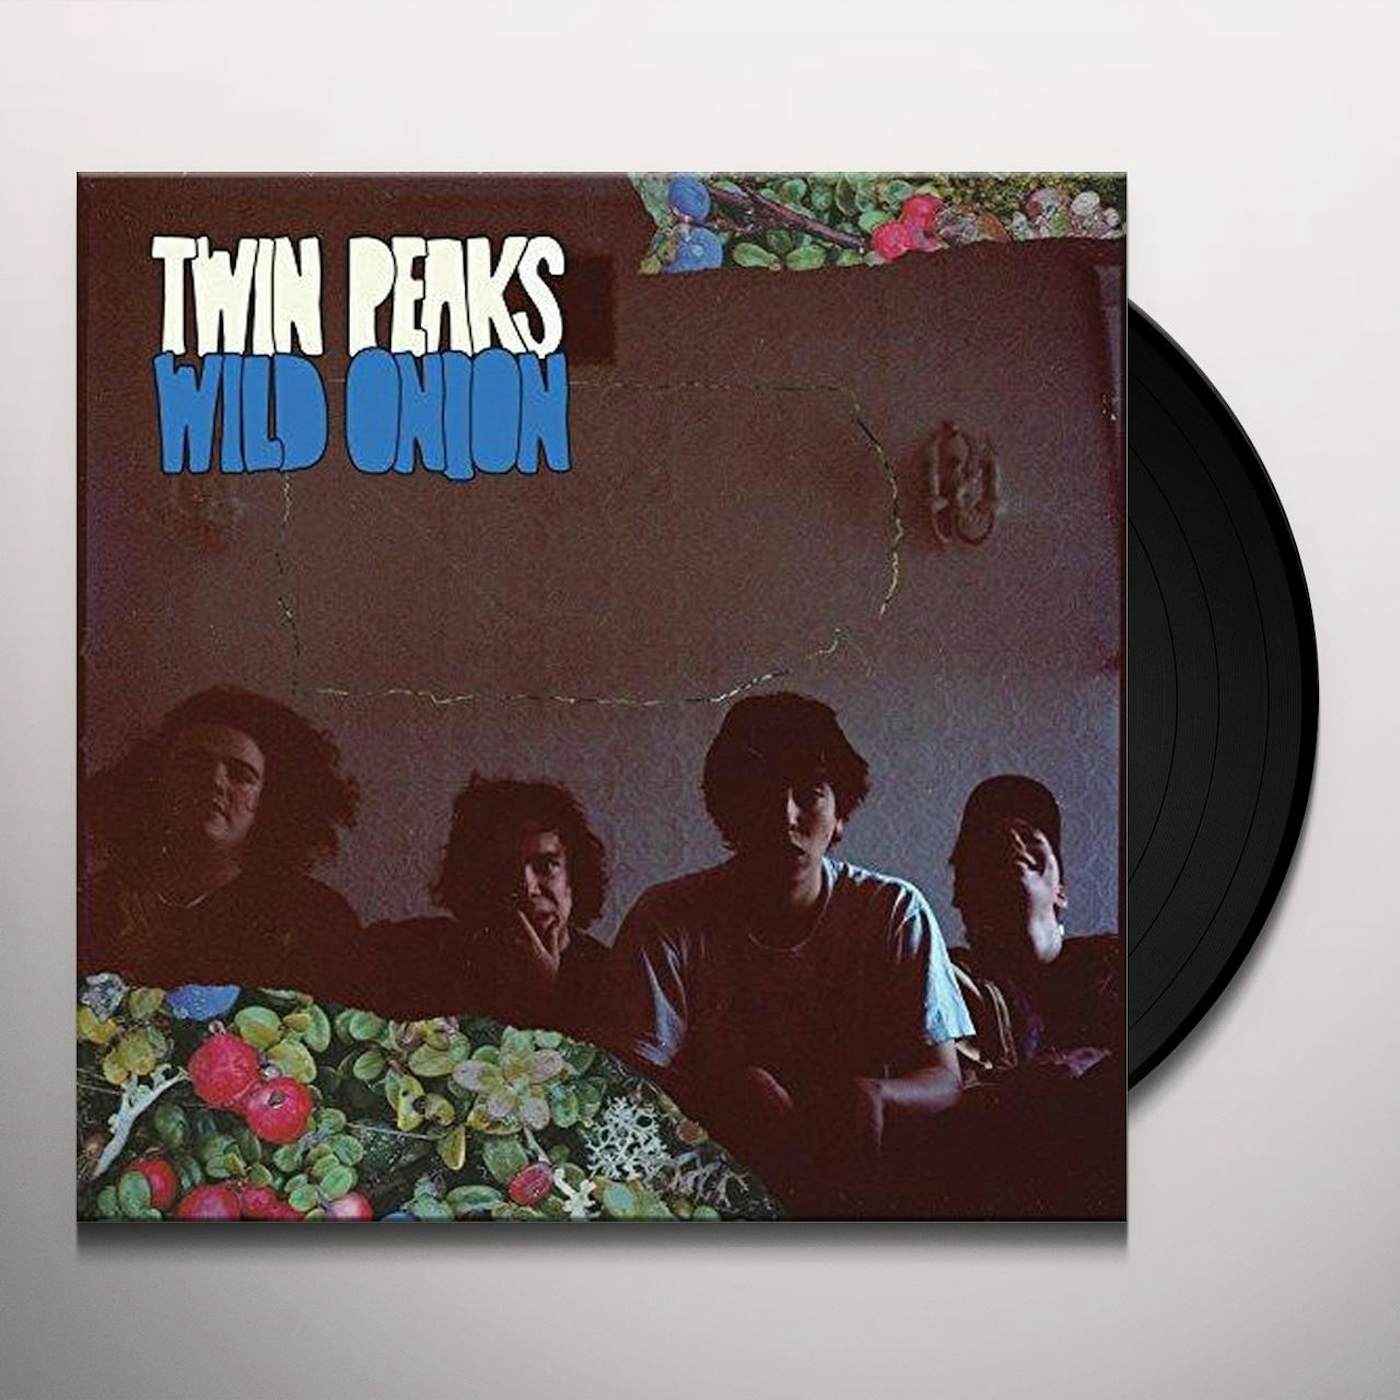 Twin Peaks Wild Onion Vinyl Record